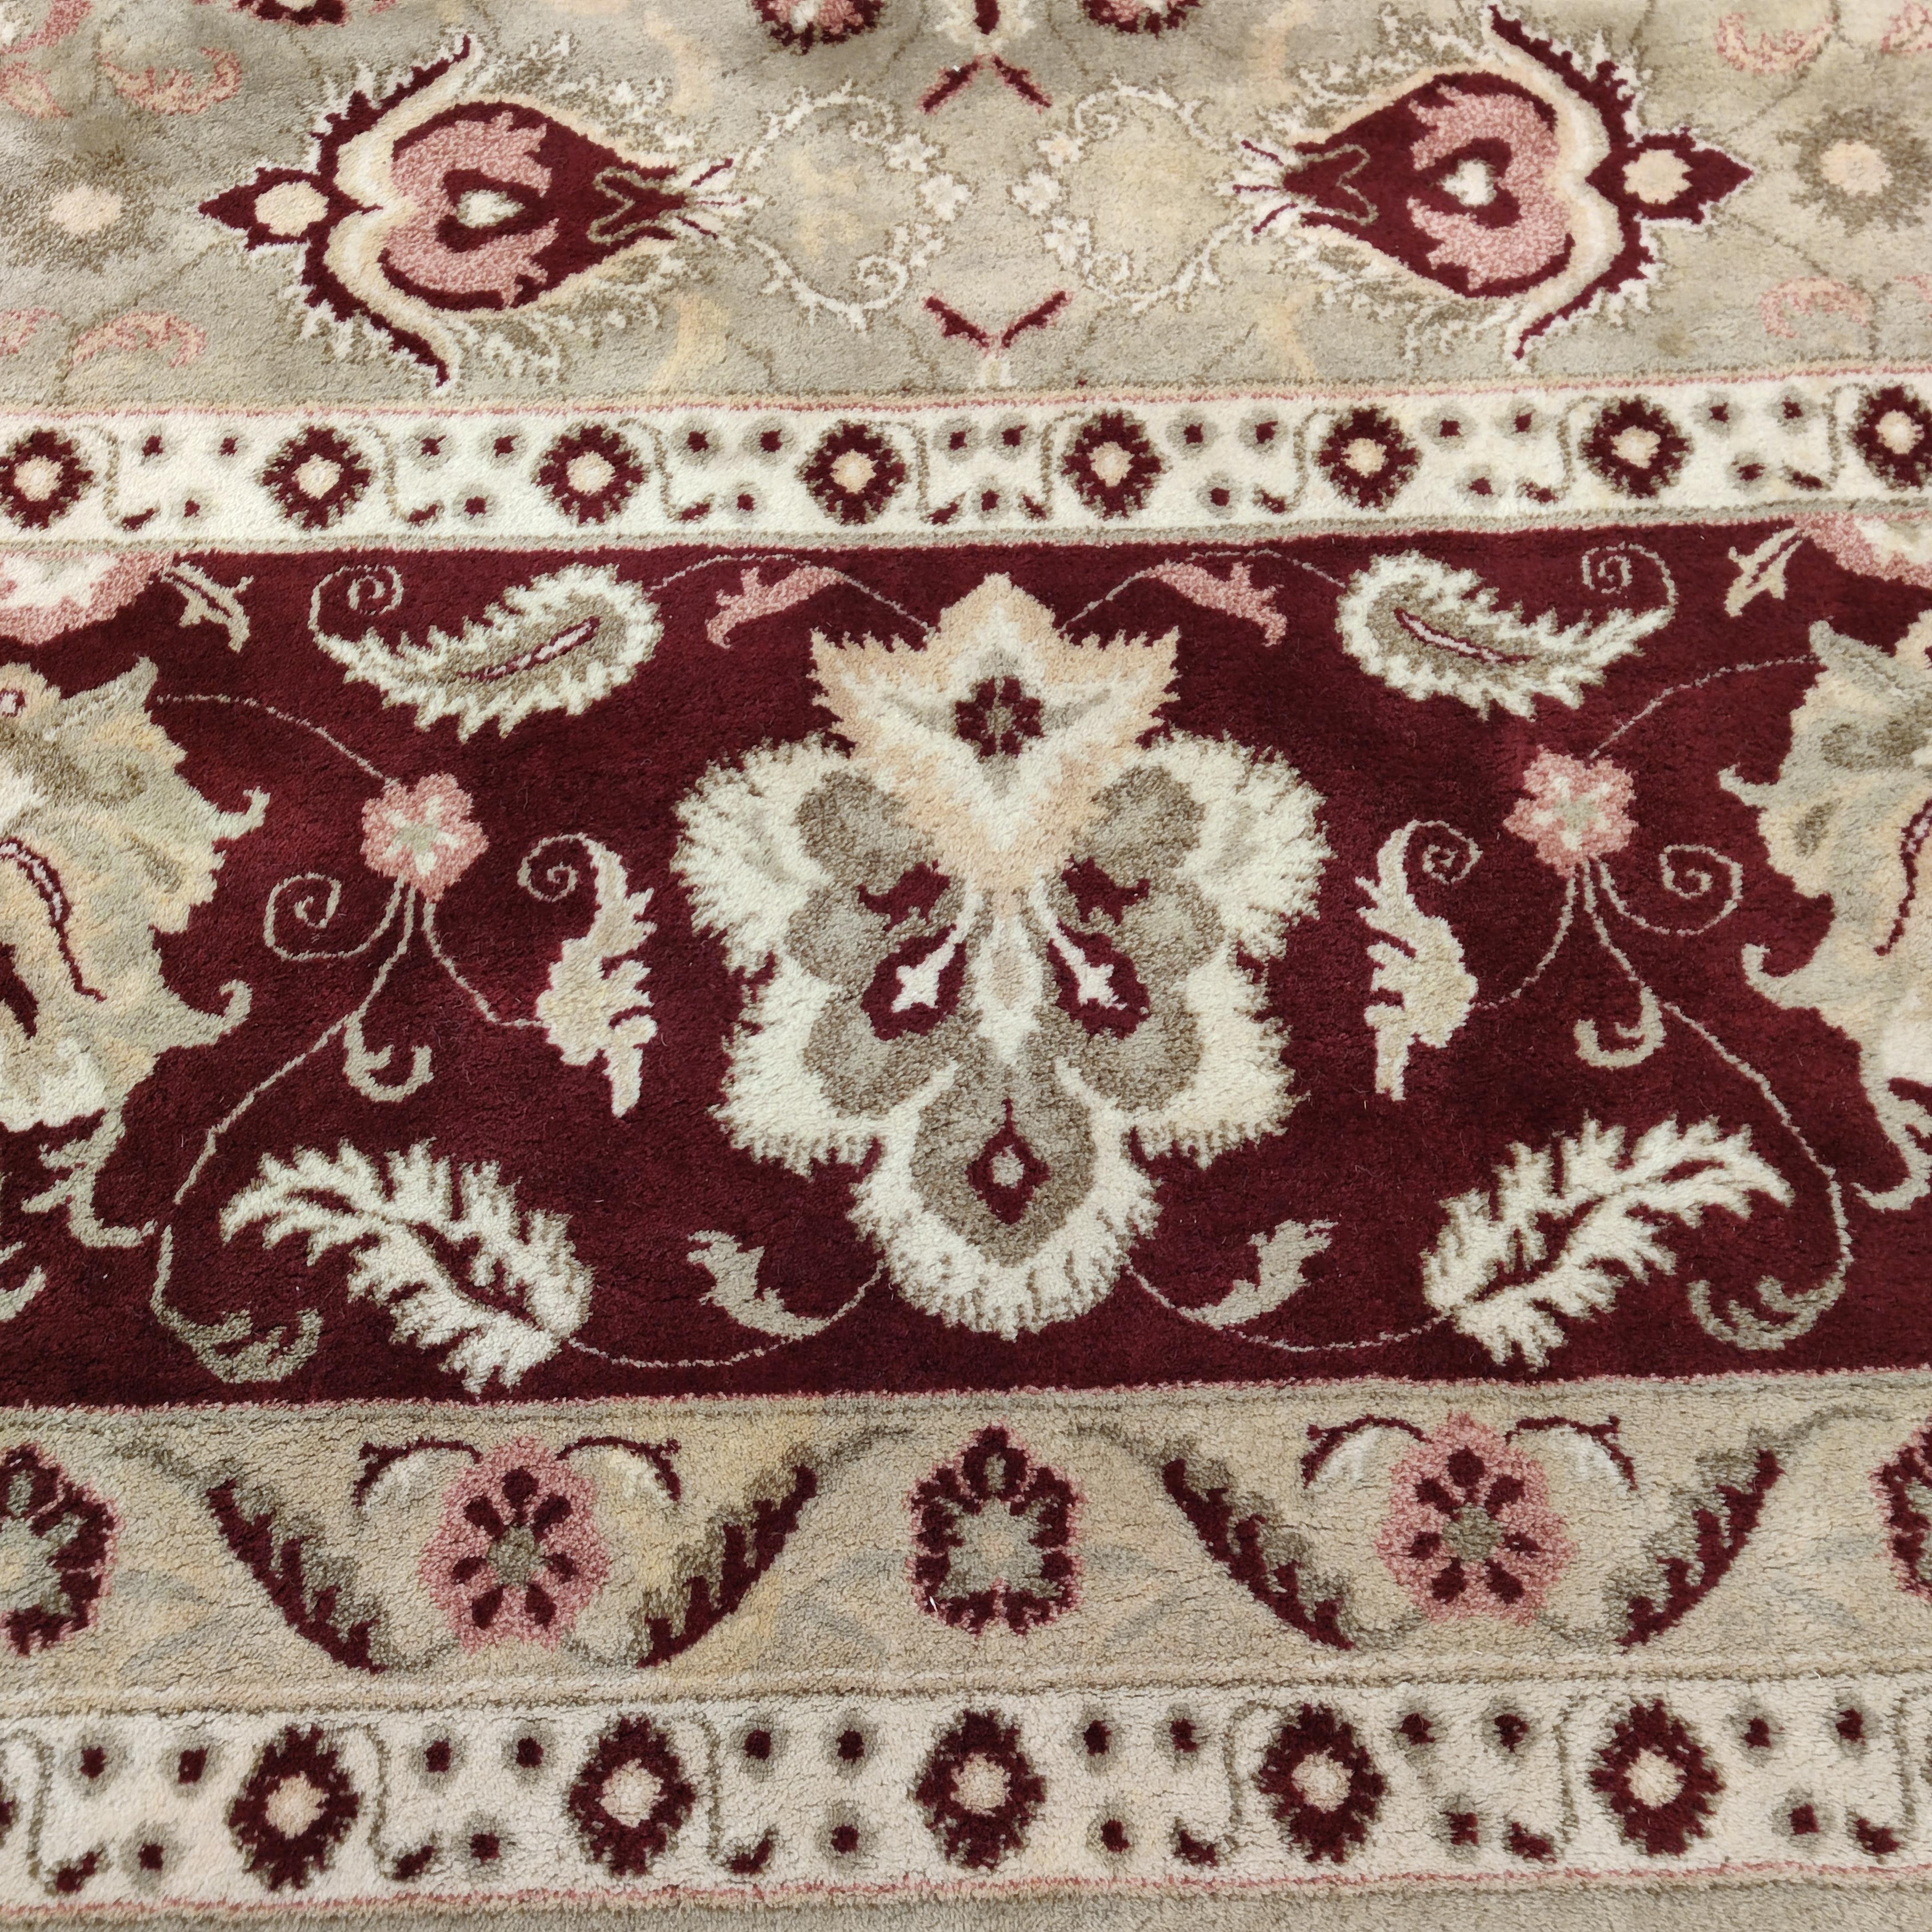 Oversize Vintage Celadon Green All-Over Design Agra Carpet with Ruby Red Border For Sale 12